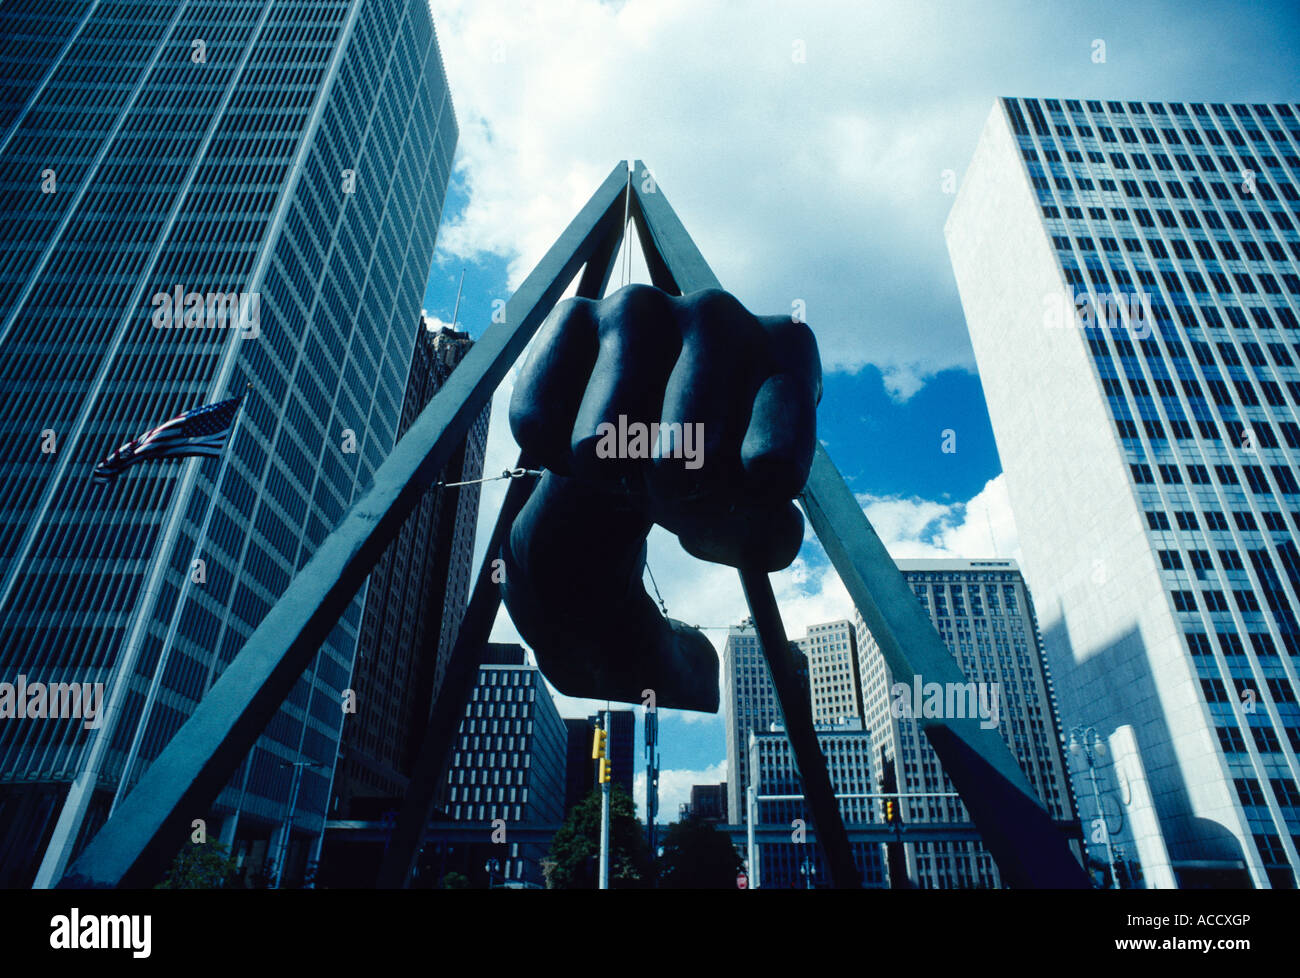 Joe Louis Fist sculpture in downtown Detroit, Michigan Stock Photo - Alamy